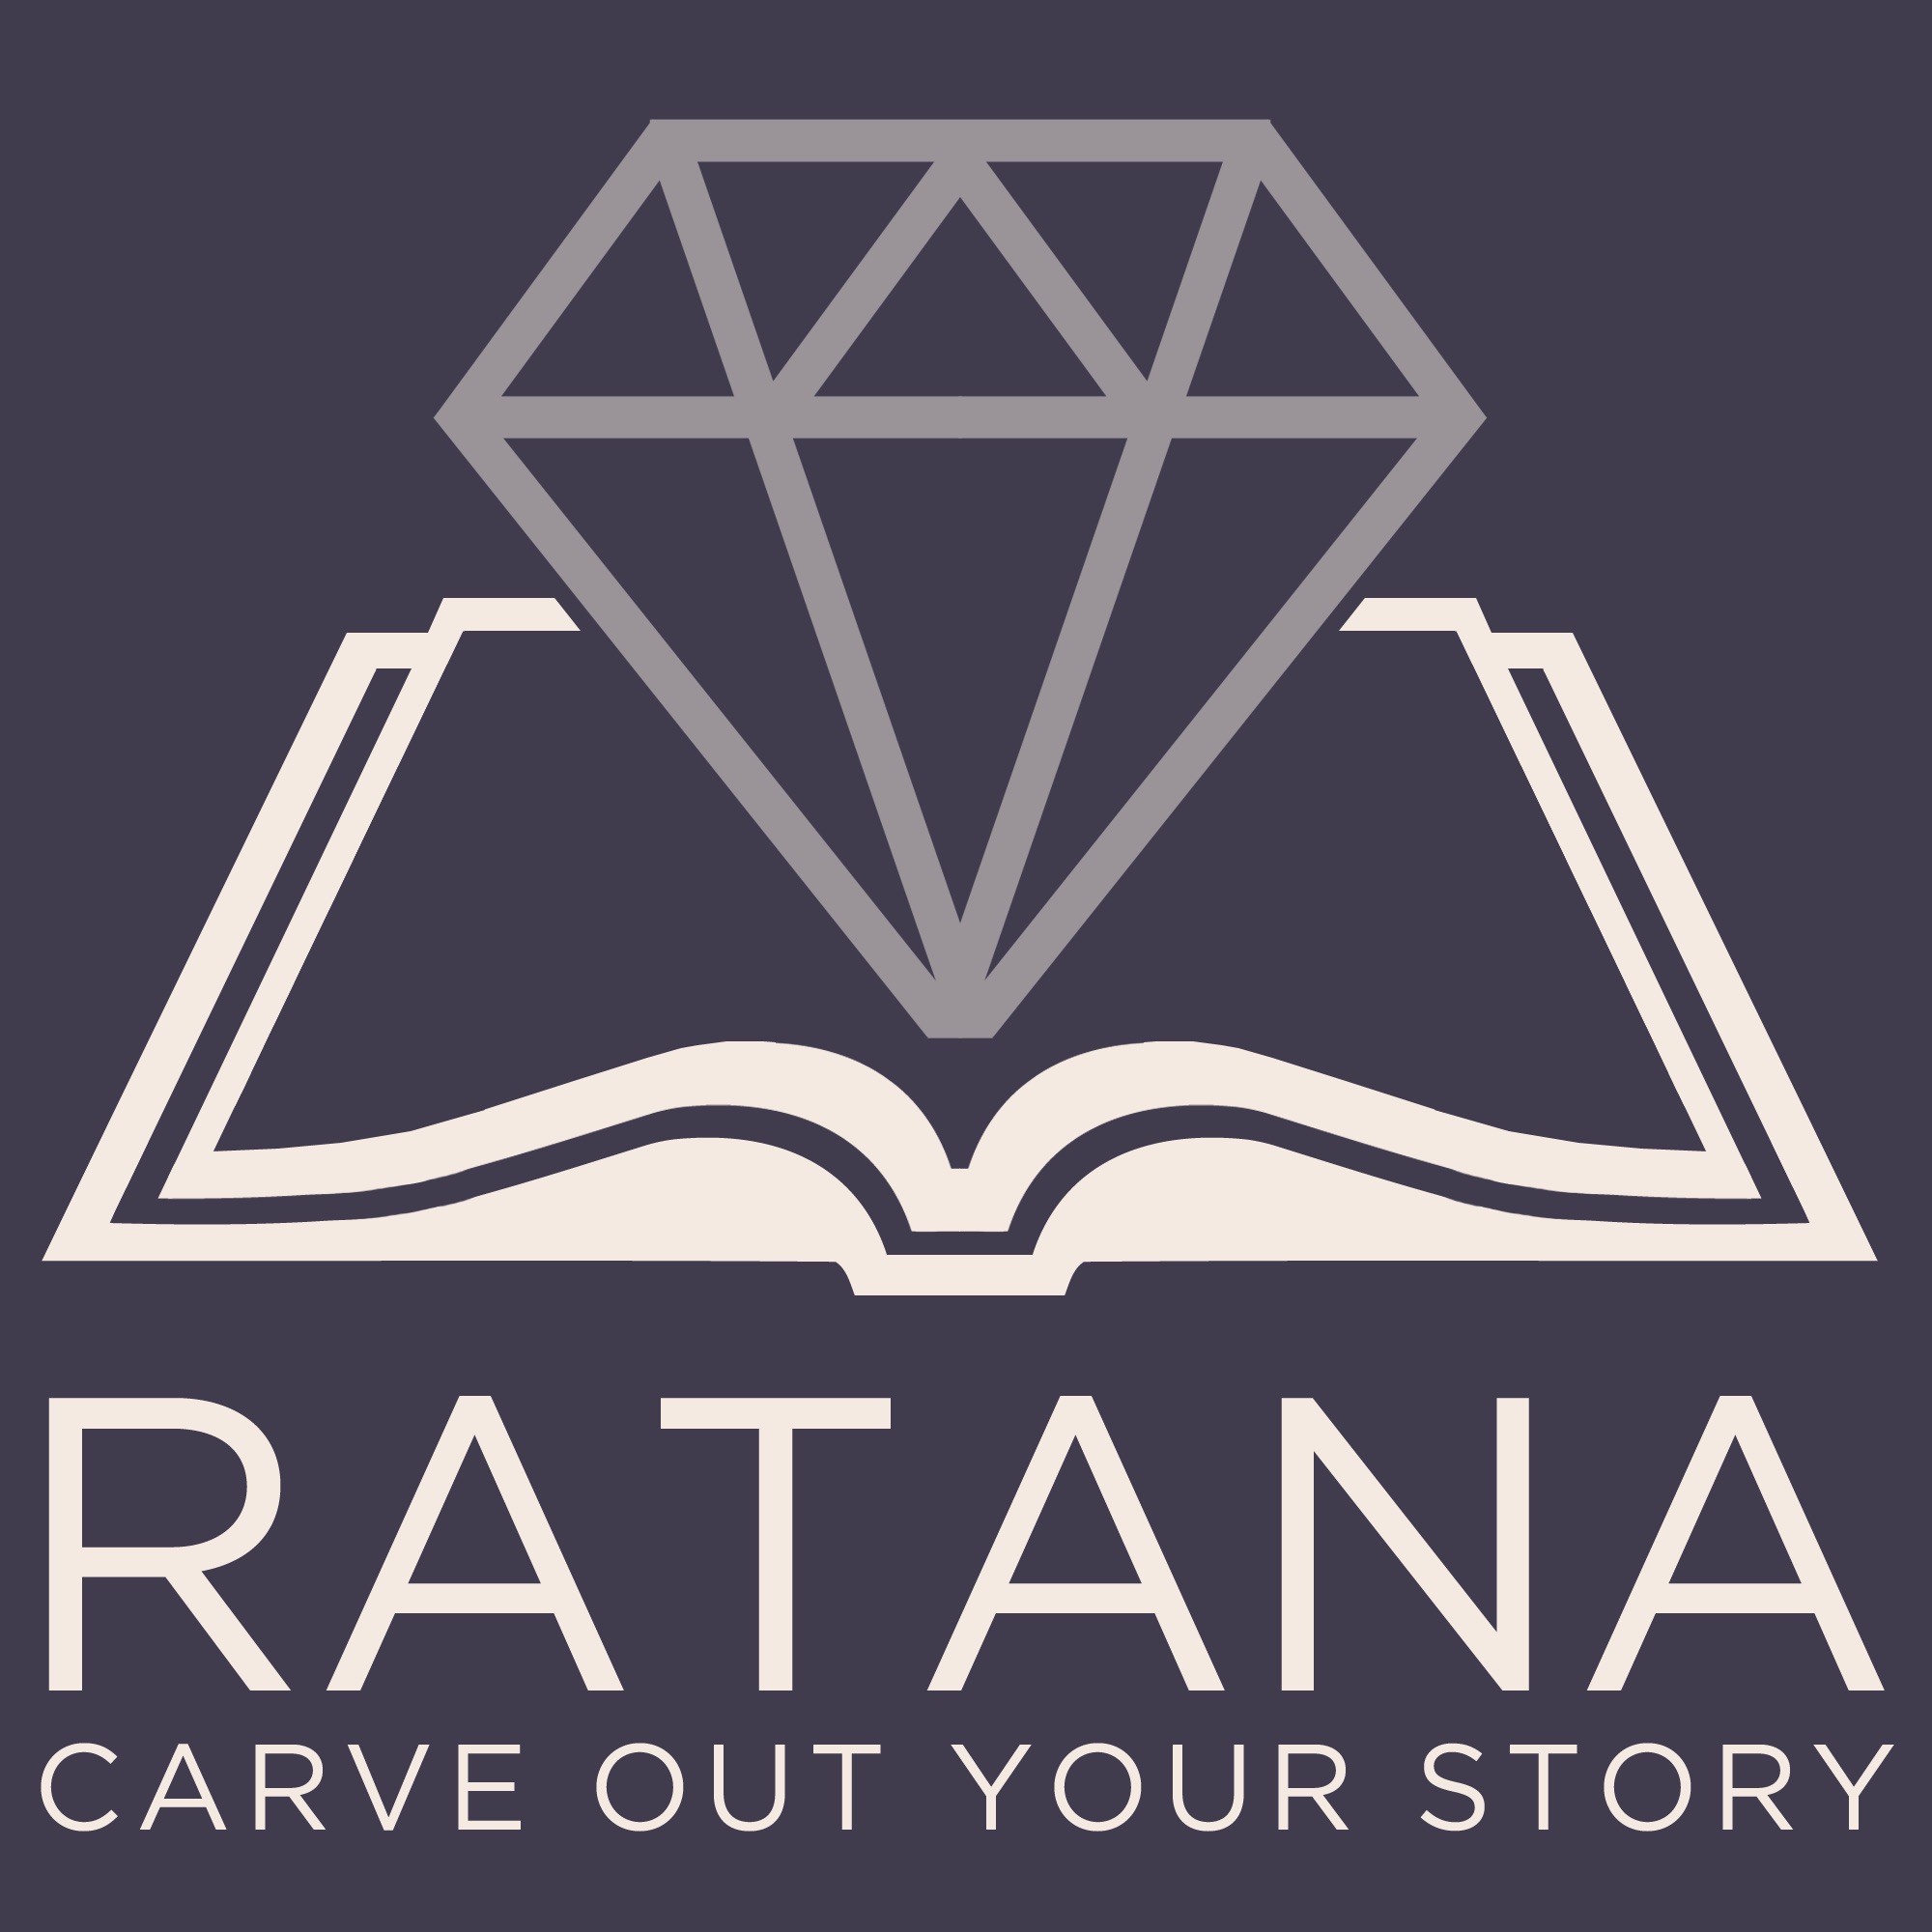 Ratana Square logo colorway 1